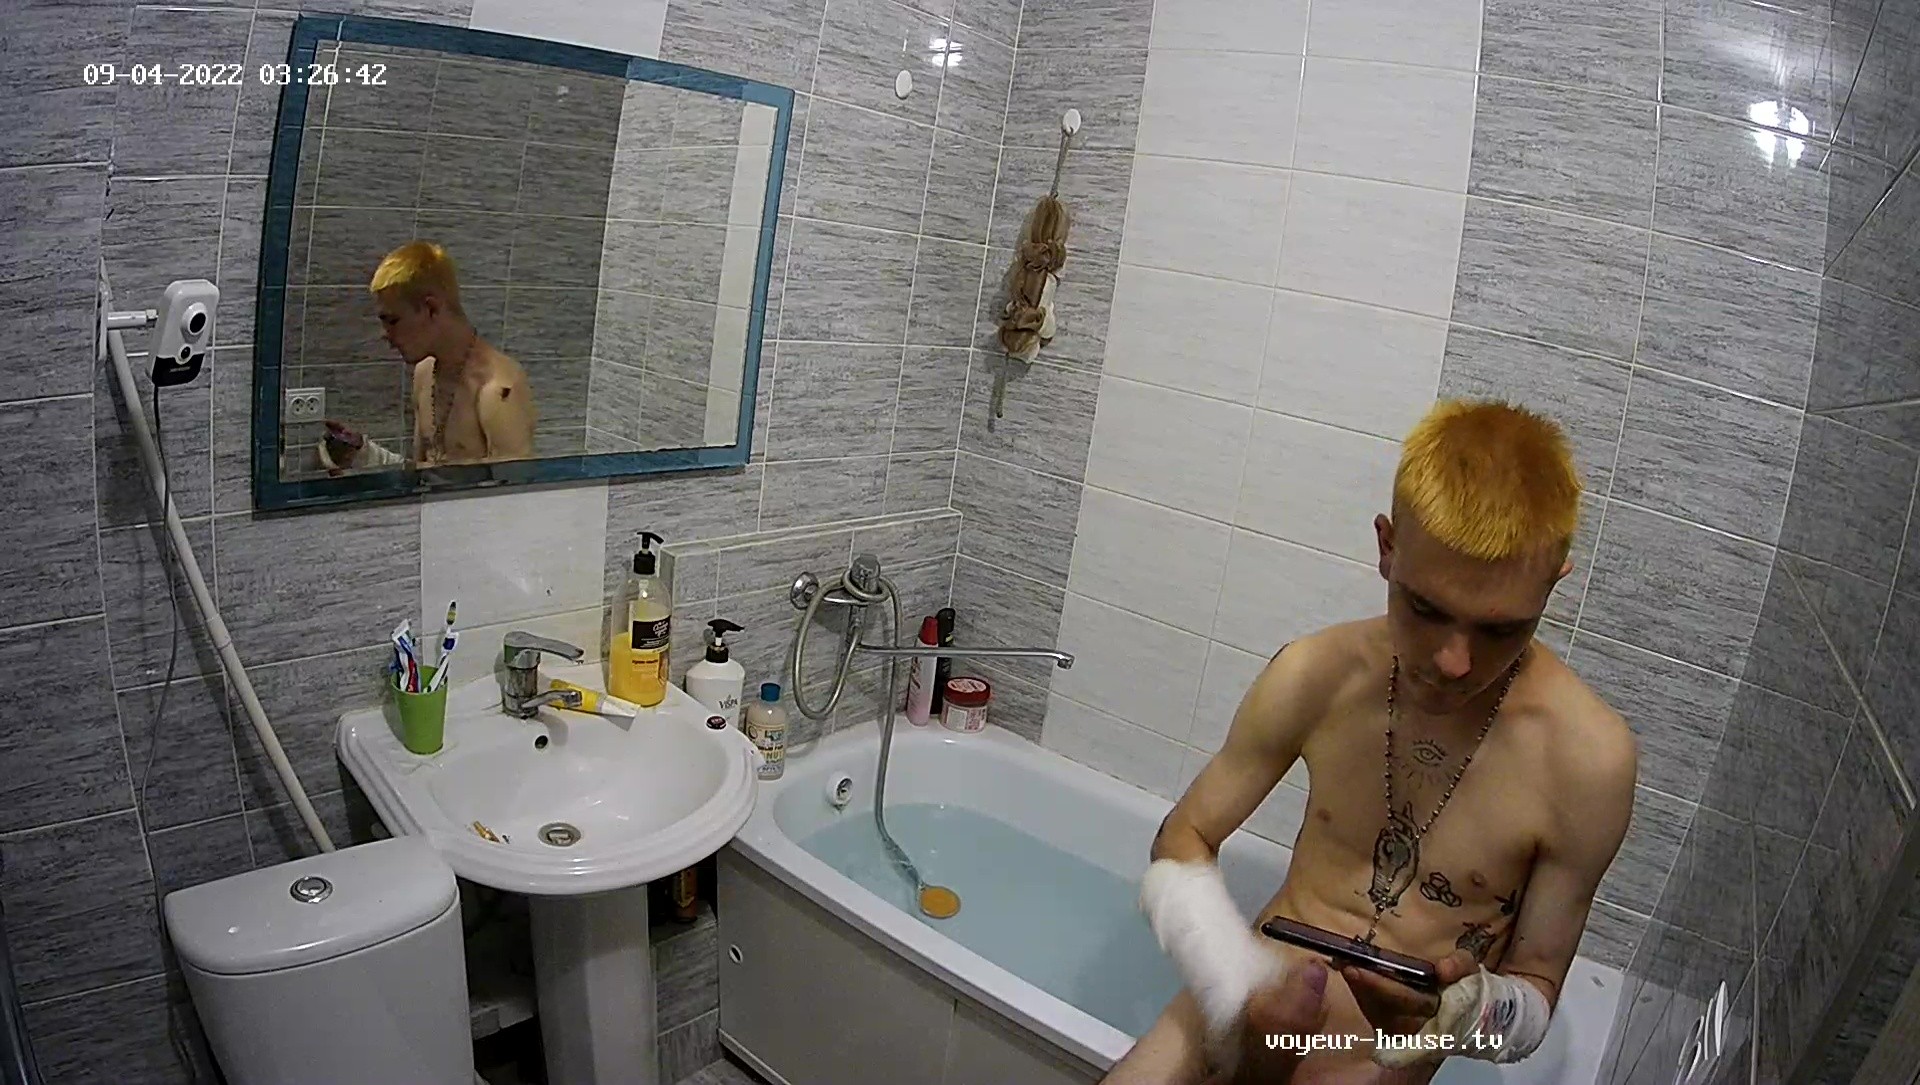 Artem jerking off in the bathroom 4 Sep 2022